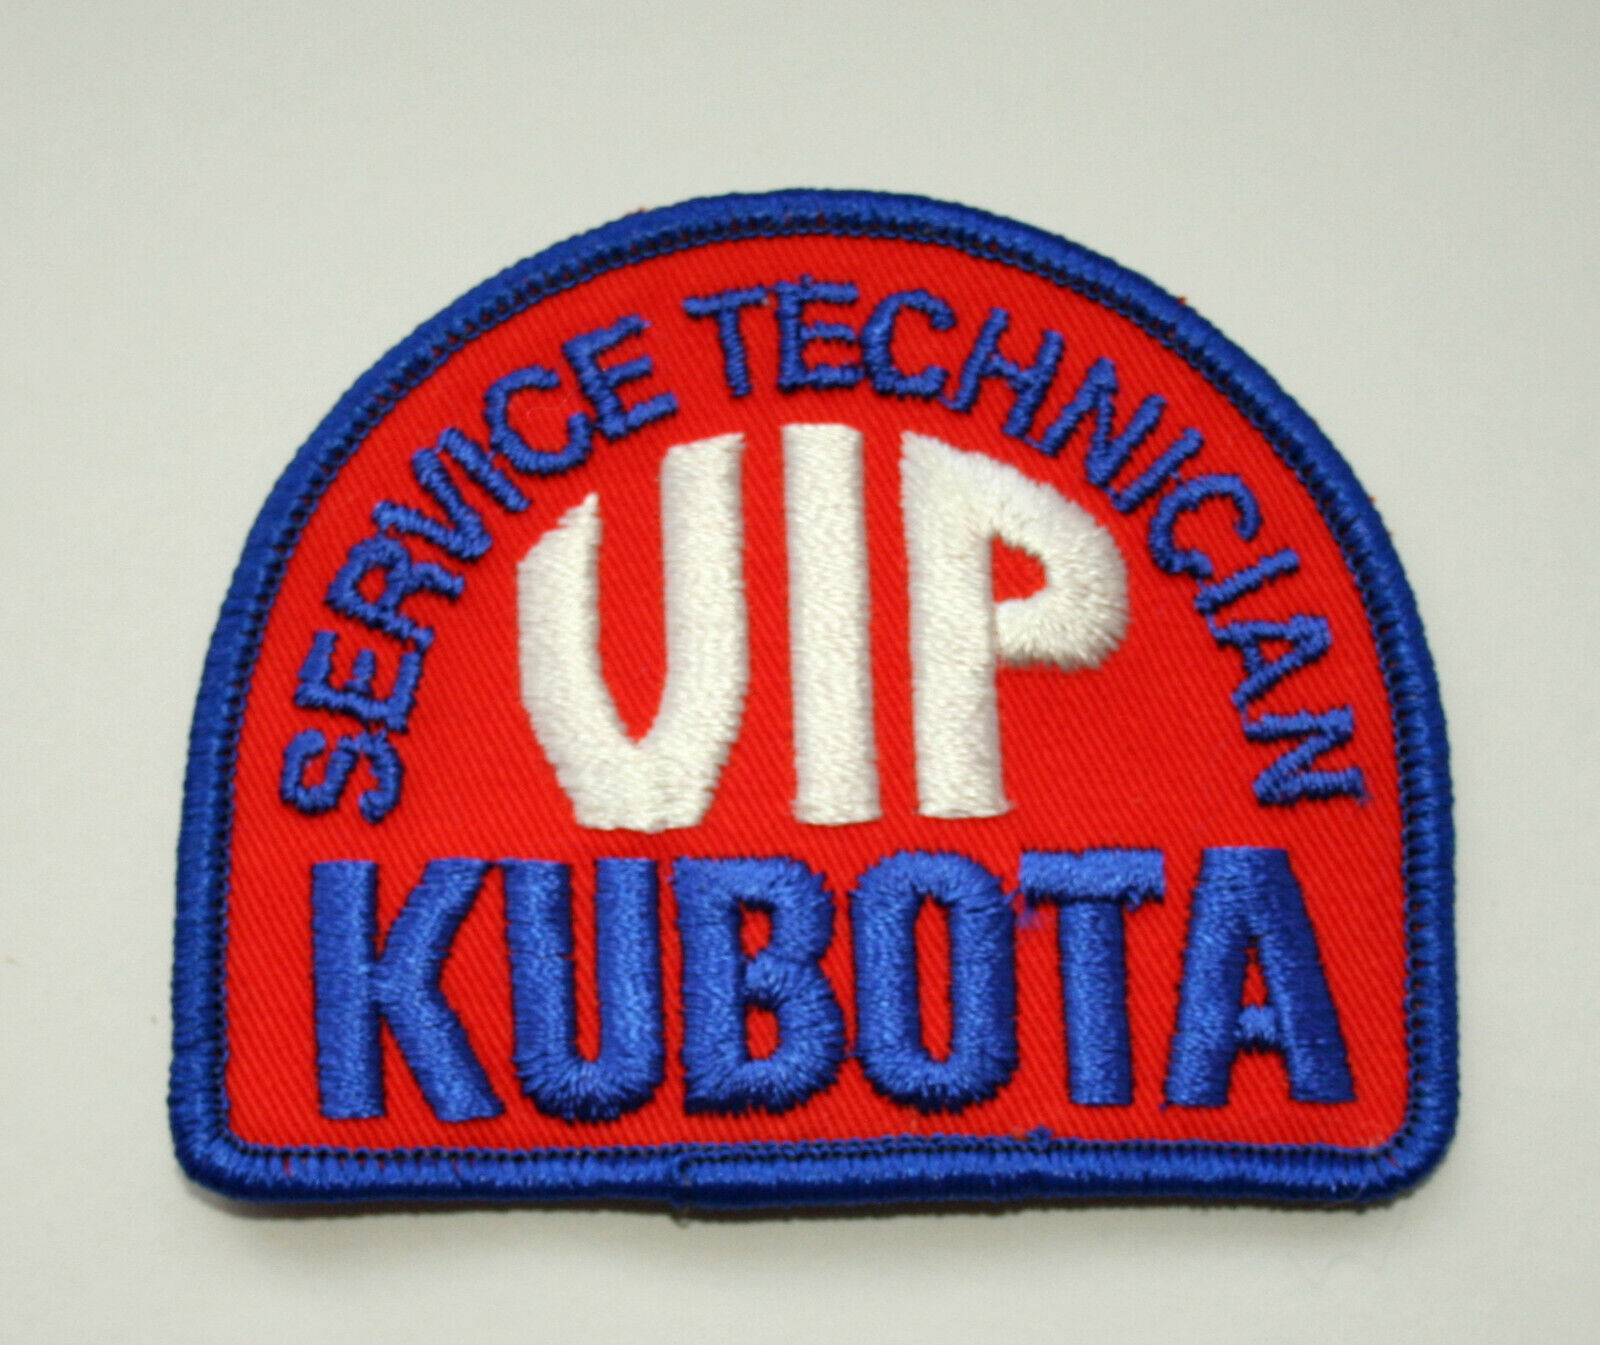 1990s Kubota VIP Service Technician Construction Equipment Orange Patch New NOS